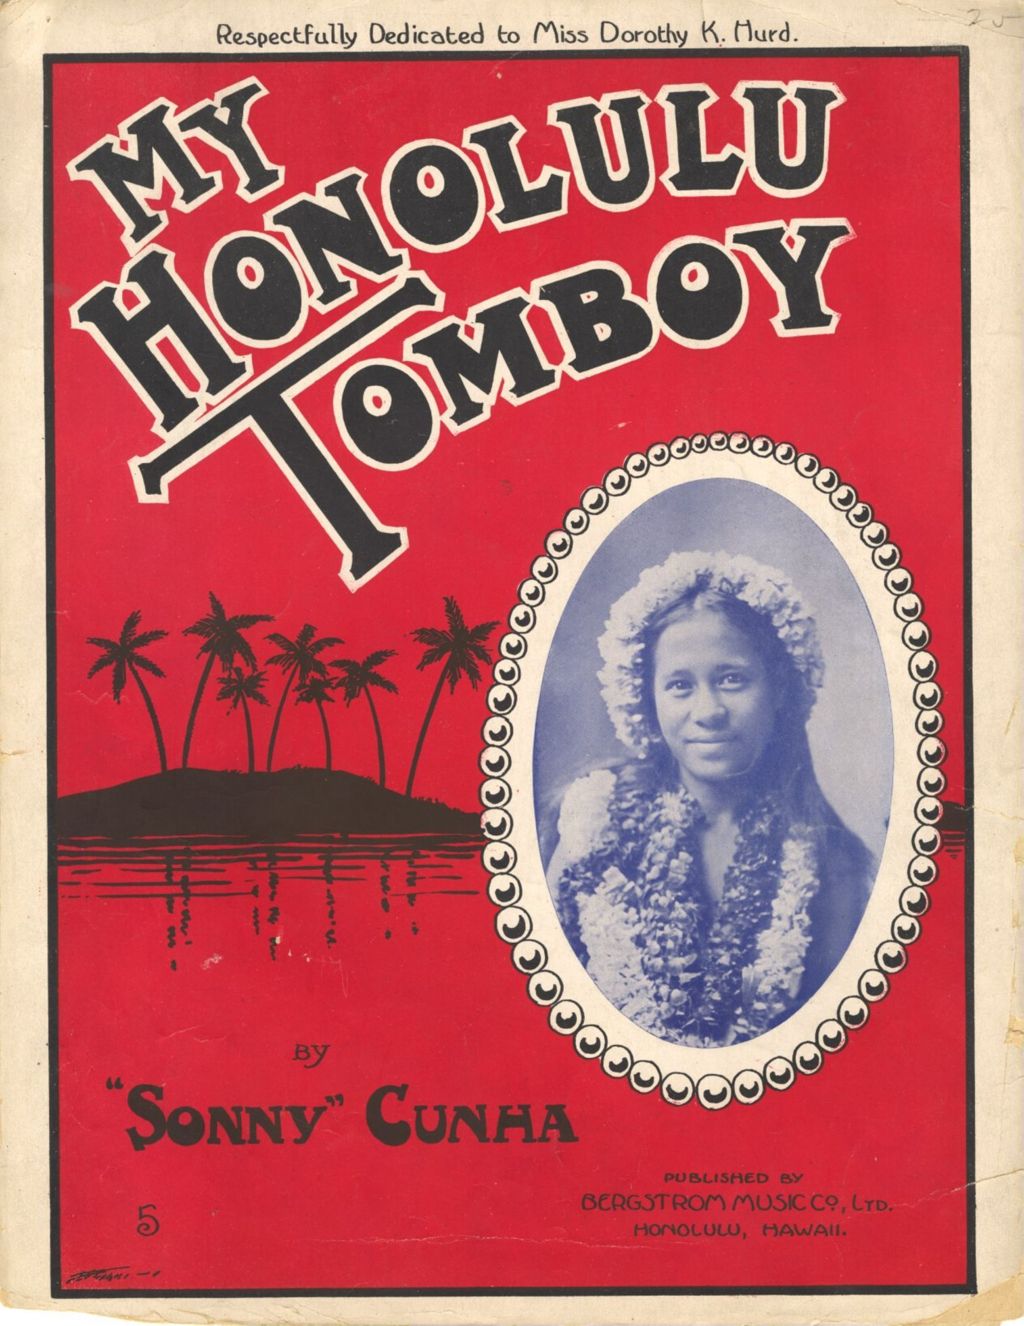 Miniature of My Honolulu Tom Boy